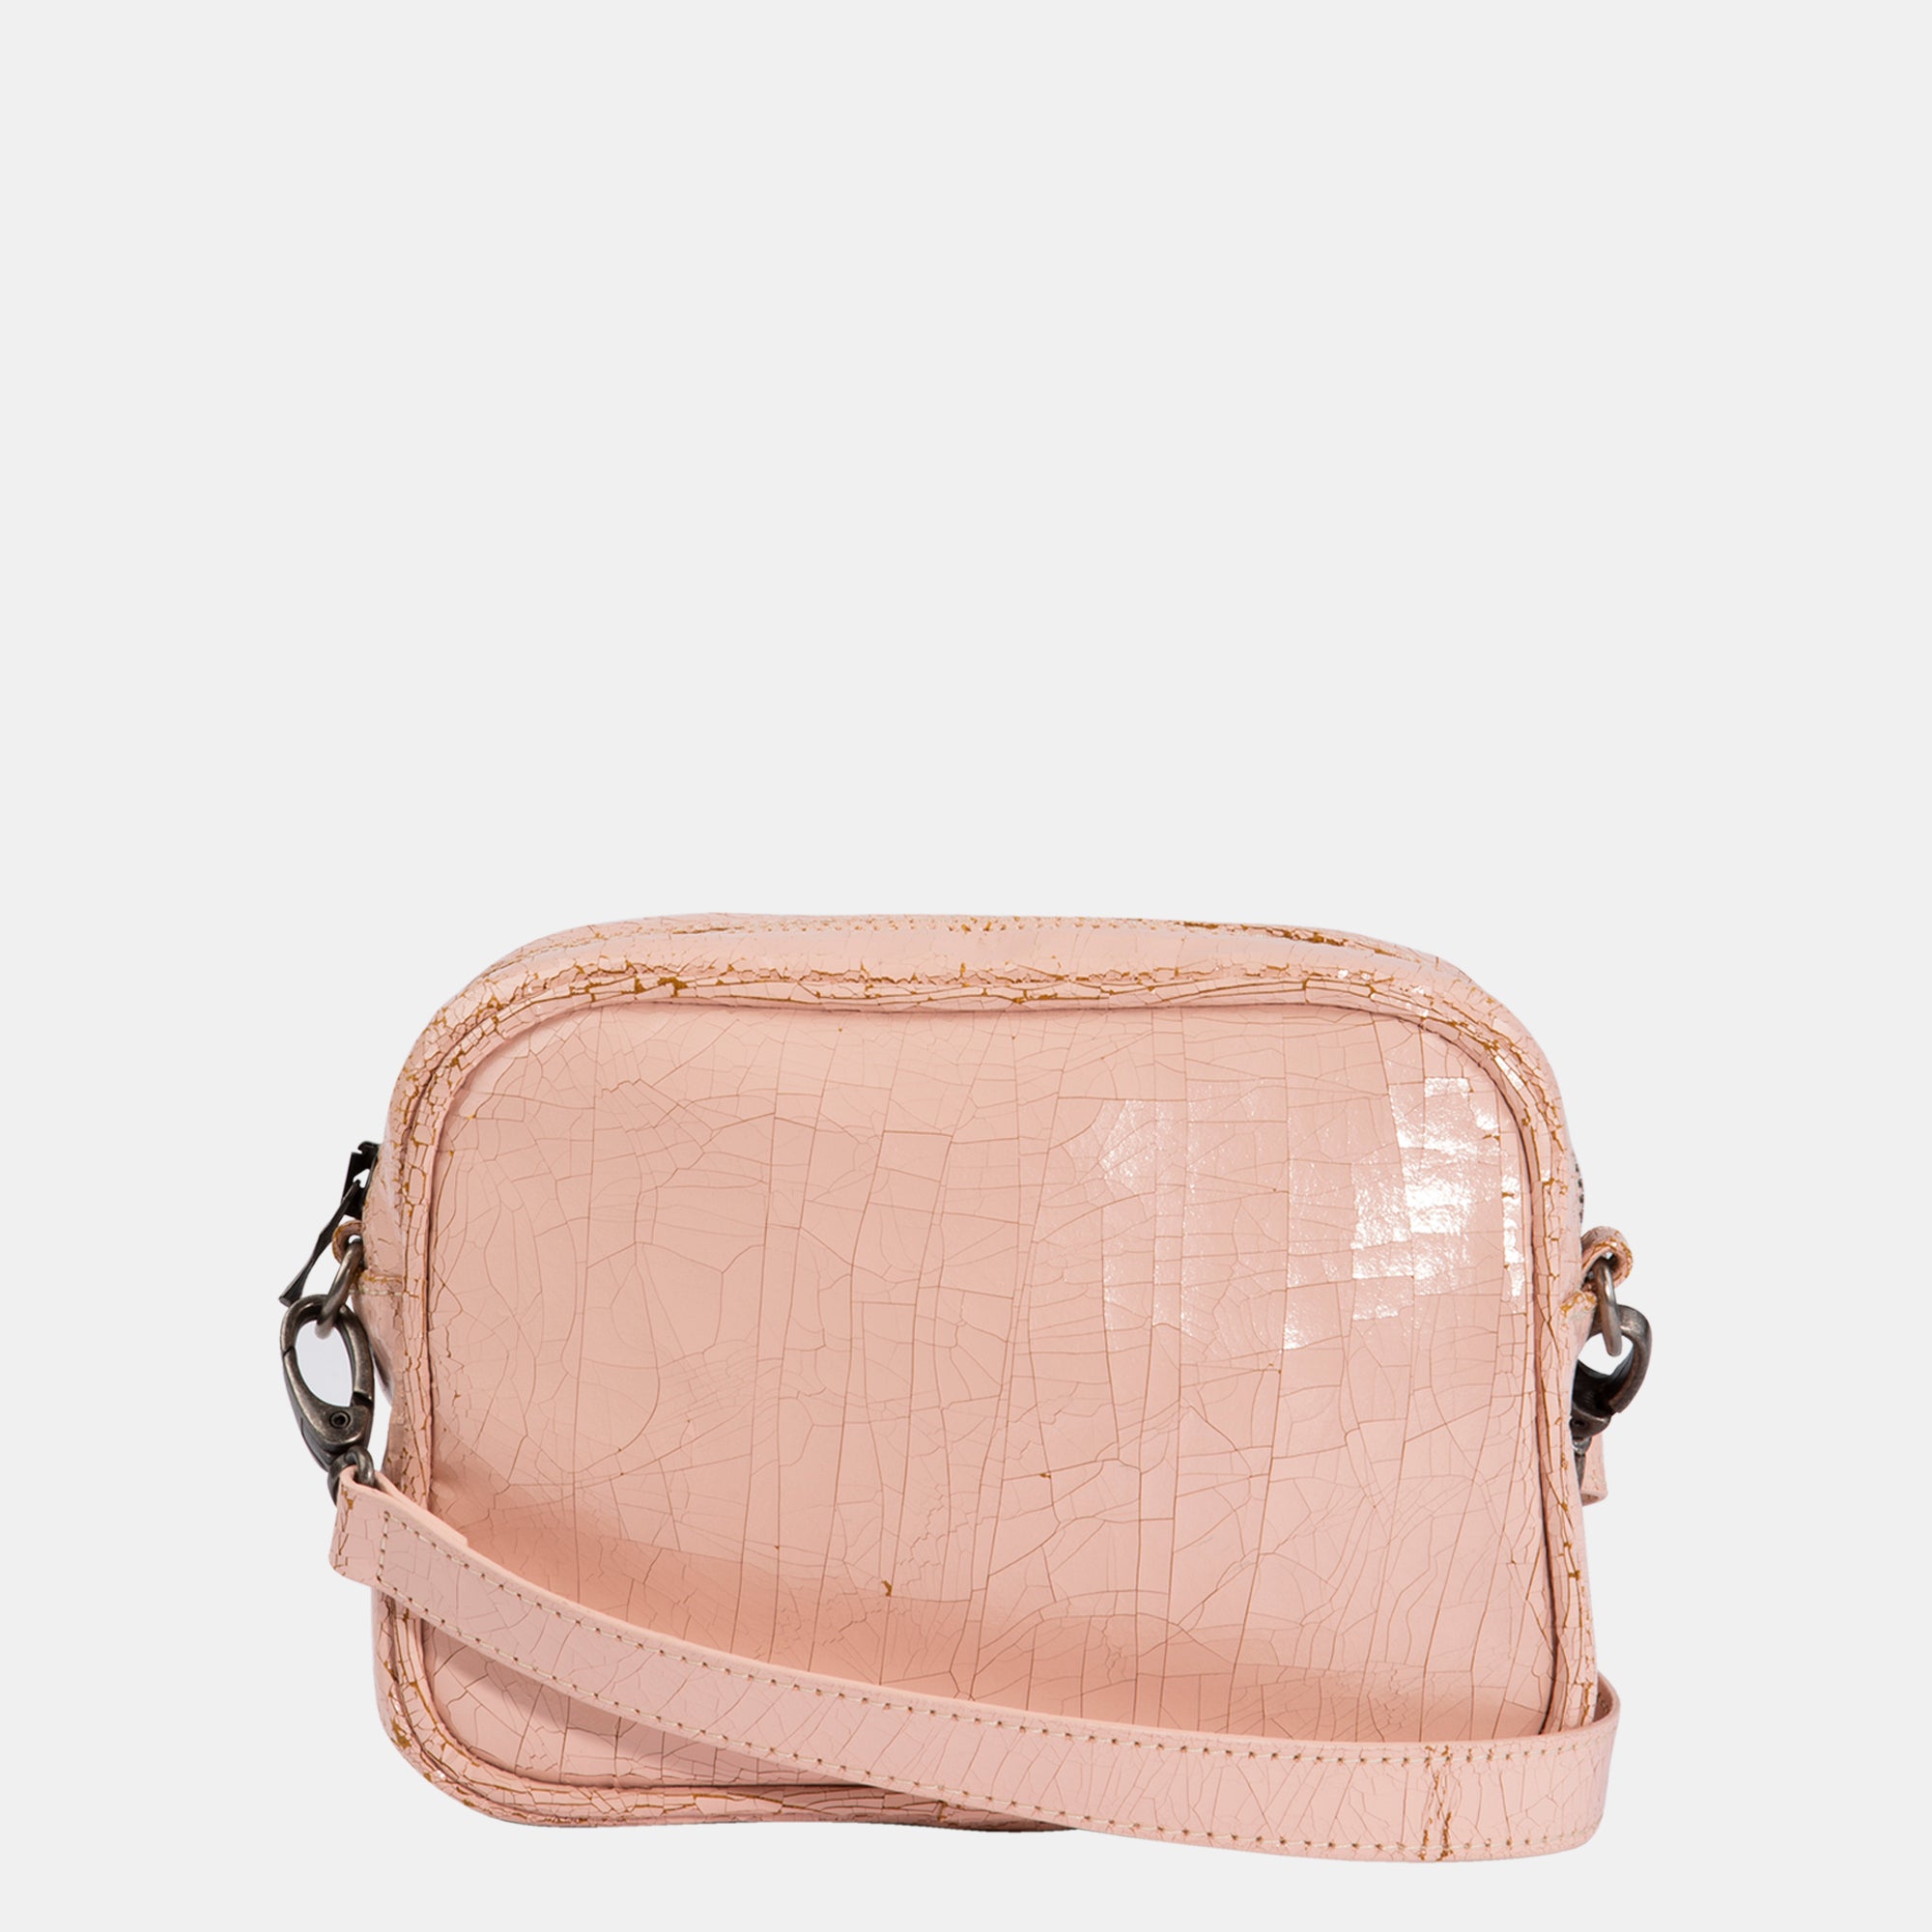 Luxury leather sustainable silk hip bag handbag fanny pack